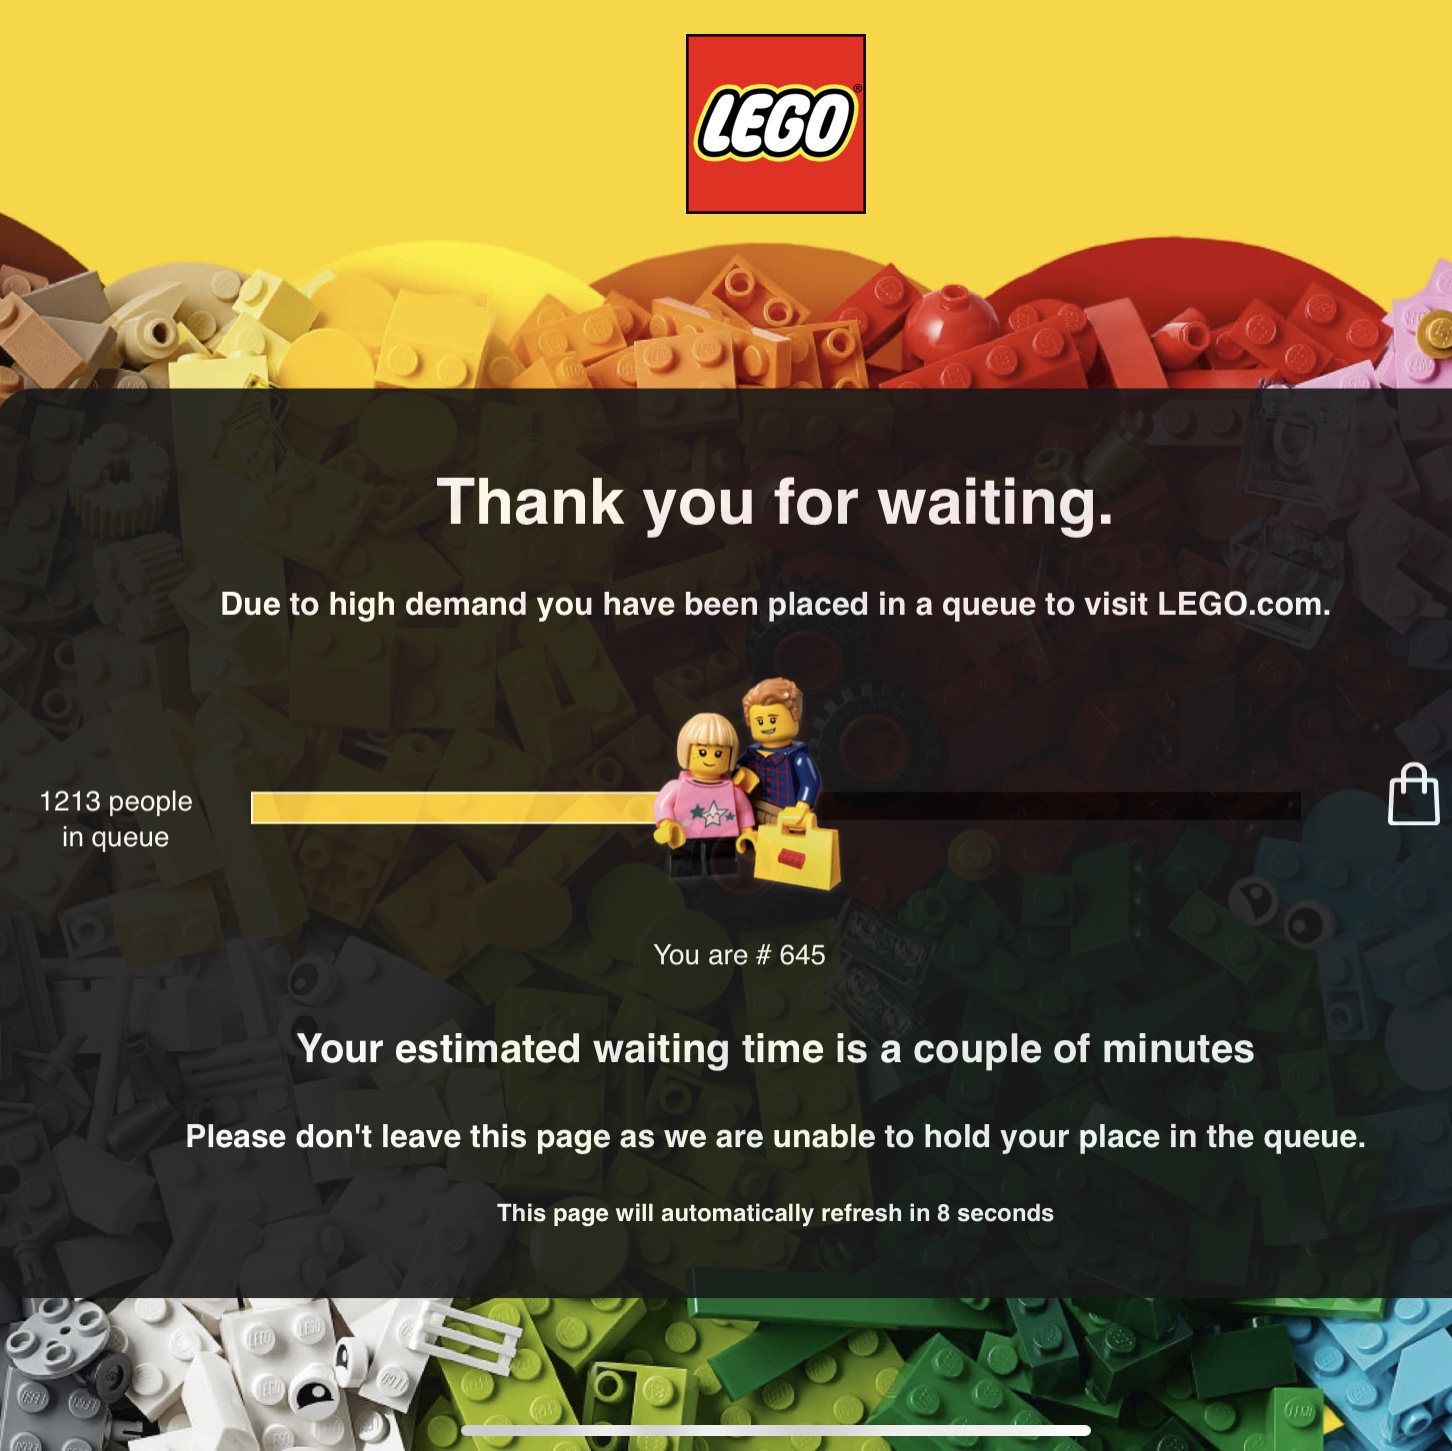 In the queue on LEGO.com